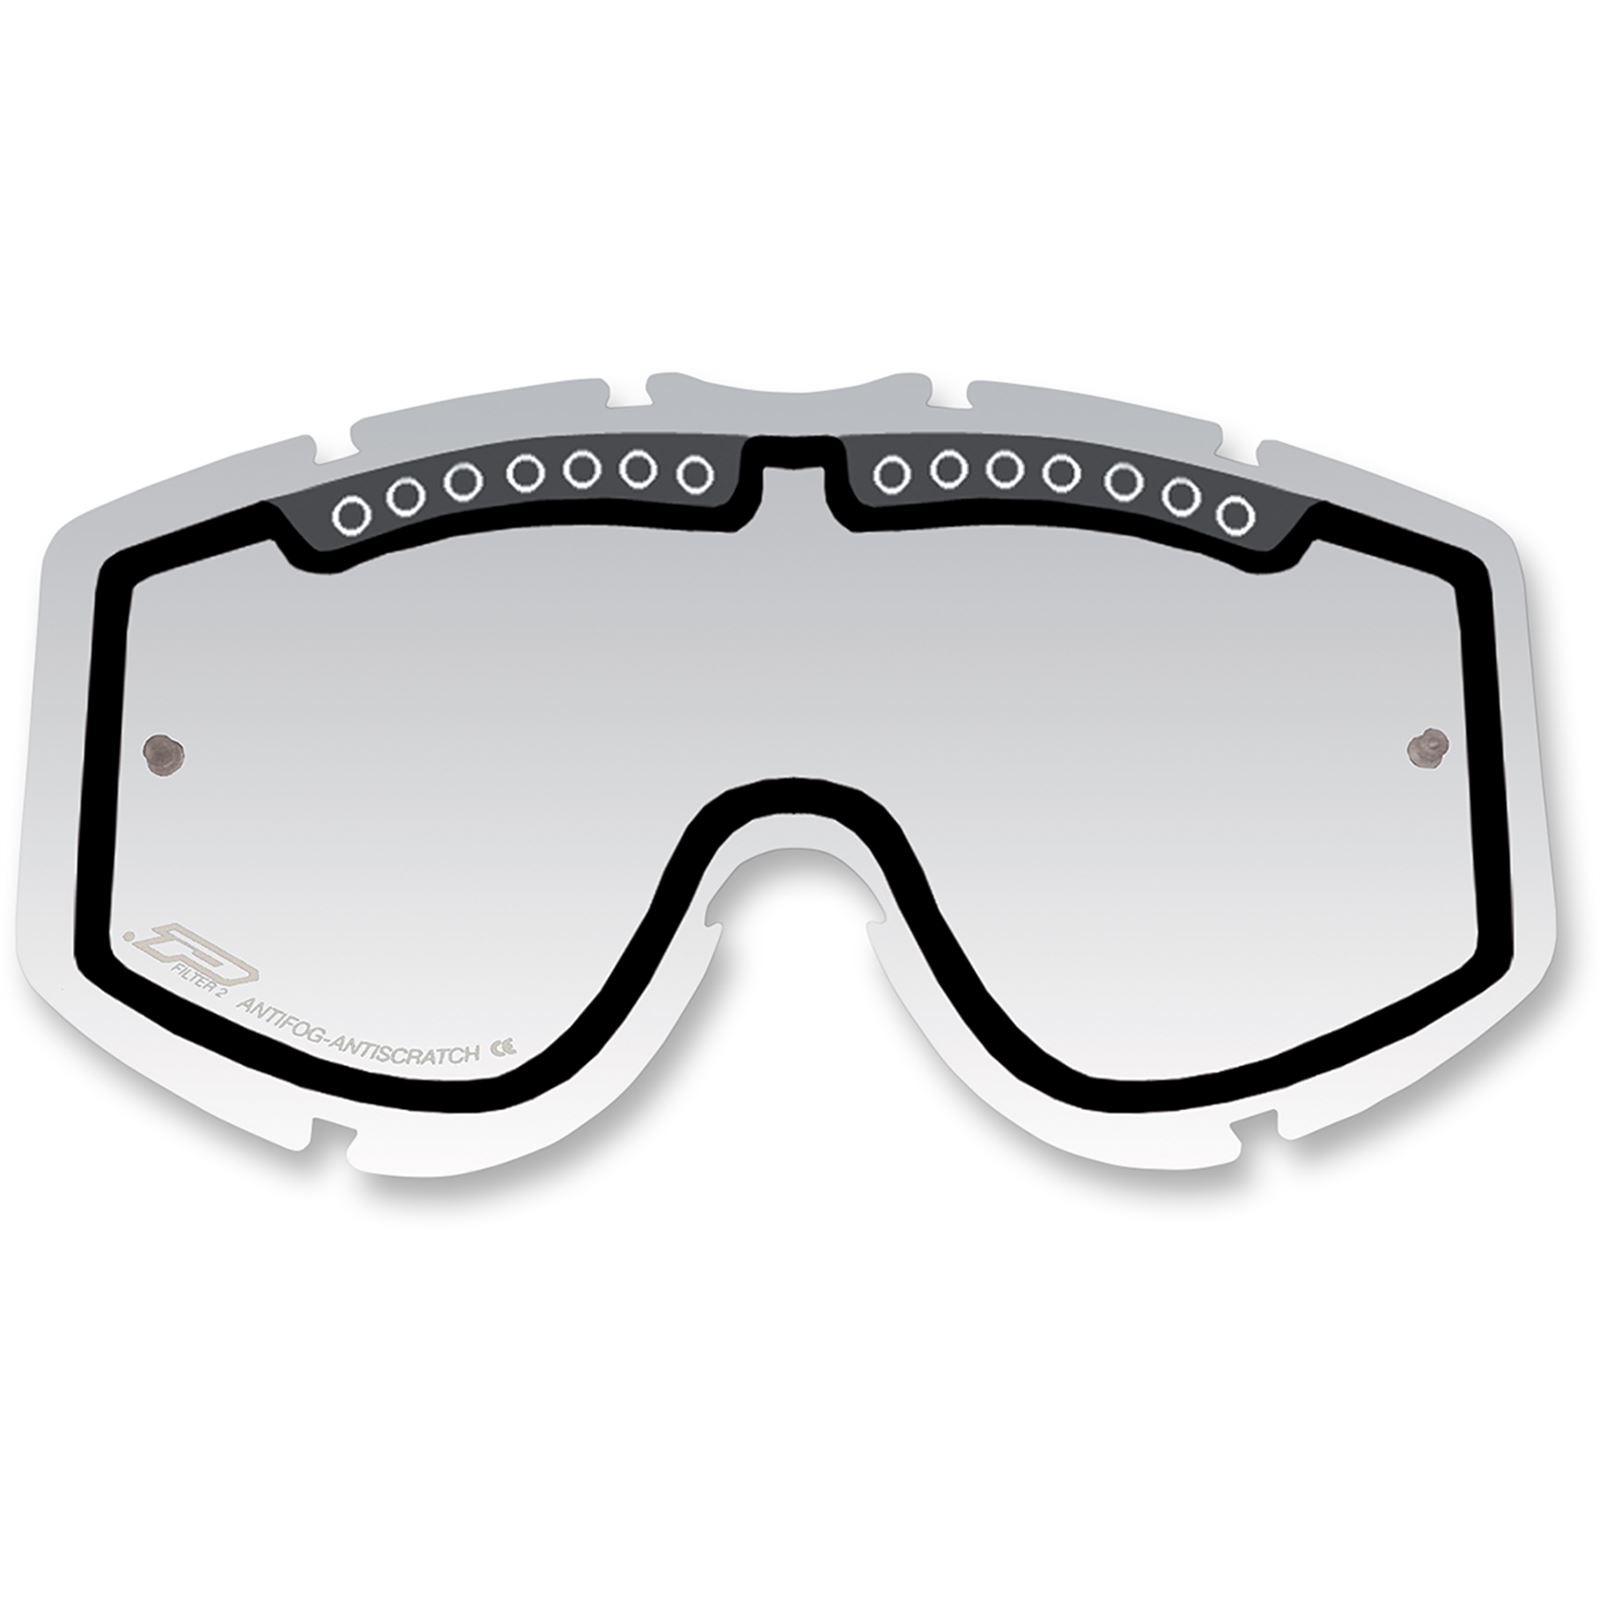 Pro Grip Goggle Lens - Light Sensitive - Dual